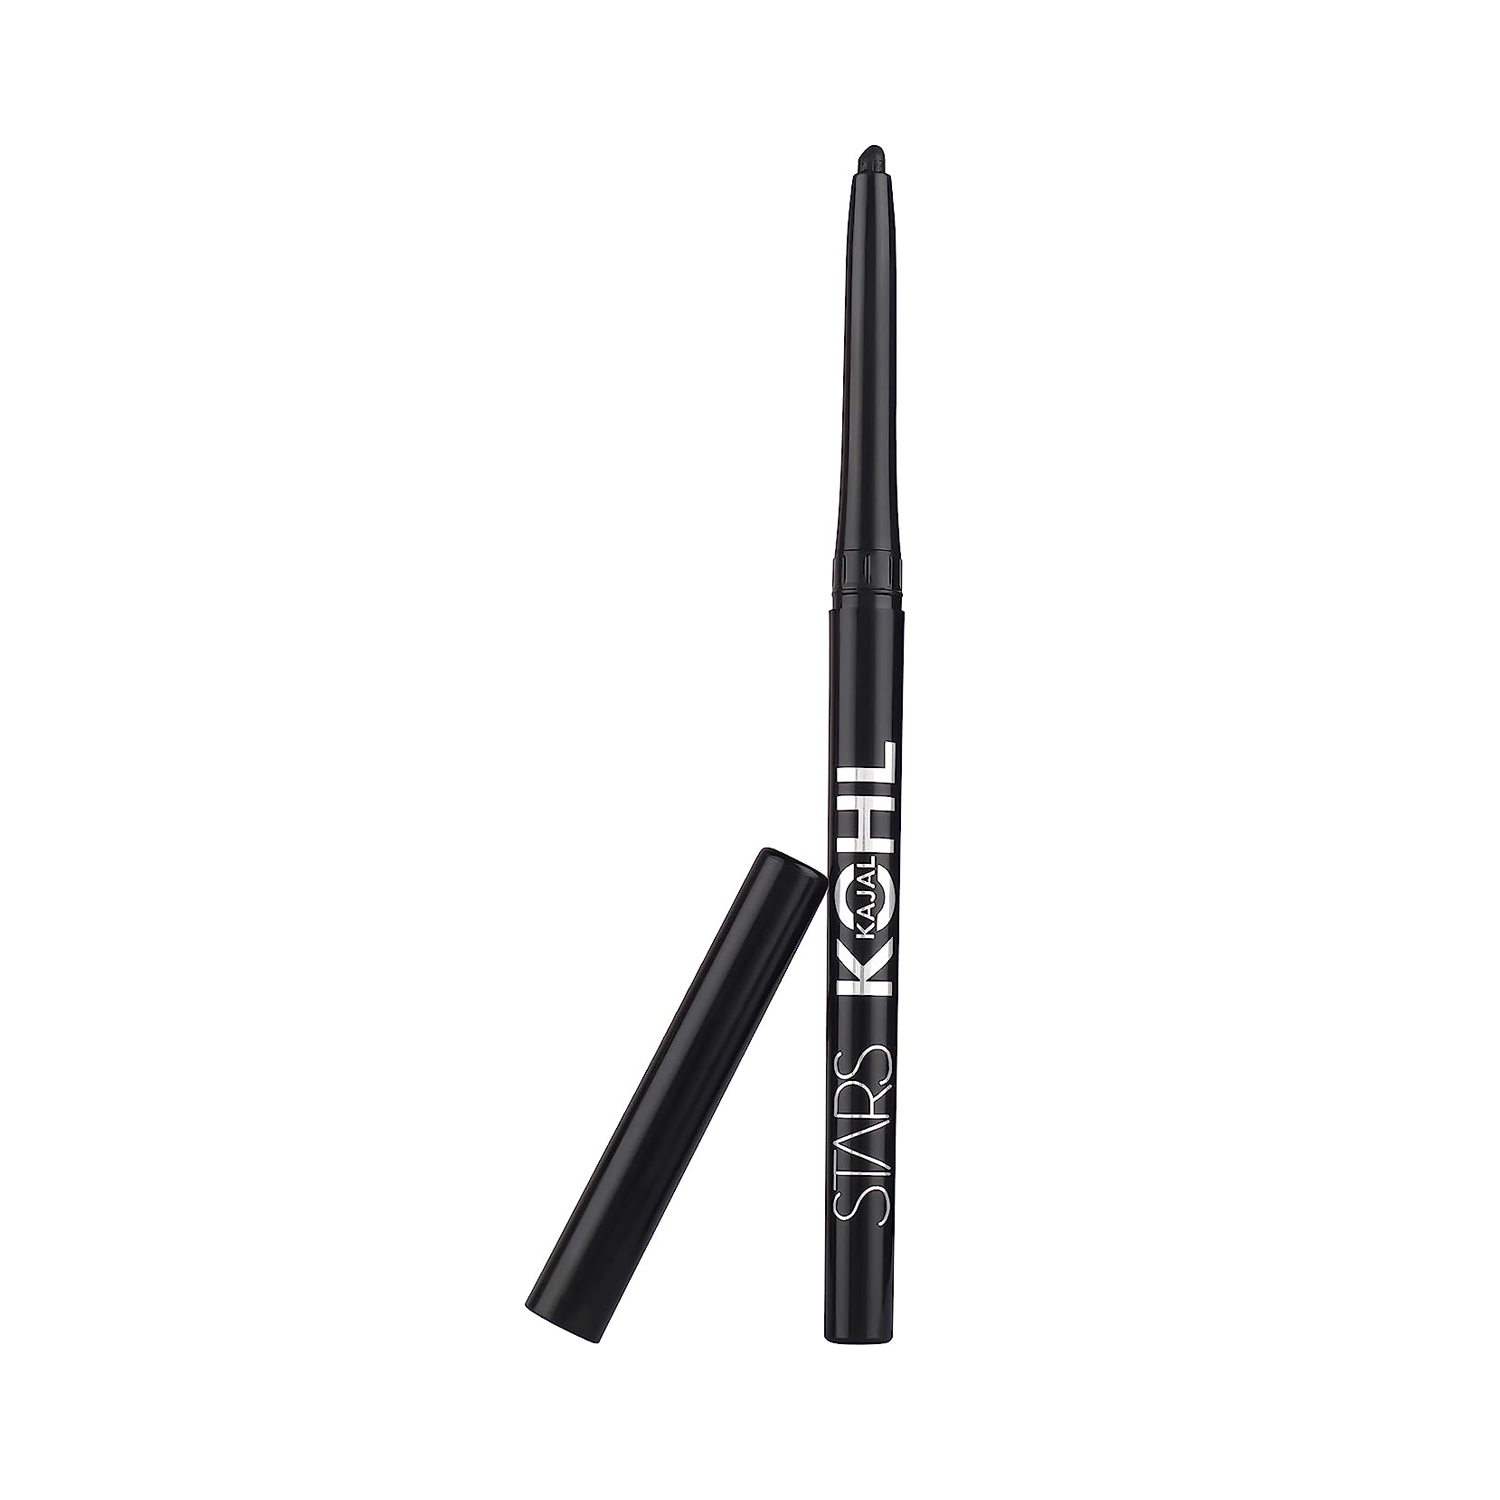 Stars Cosmetics | Stars Cosmetics Kohl Eye Makeup Kajal Pencil - Black (2.25g)